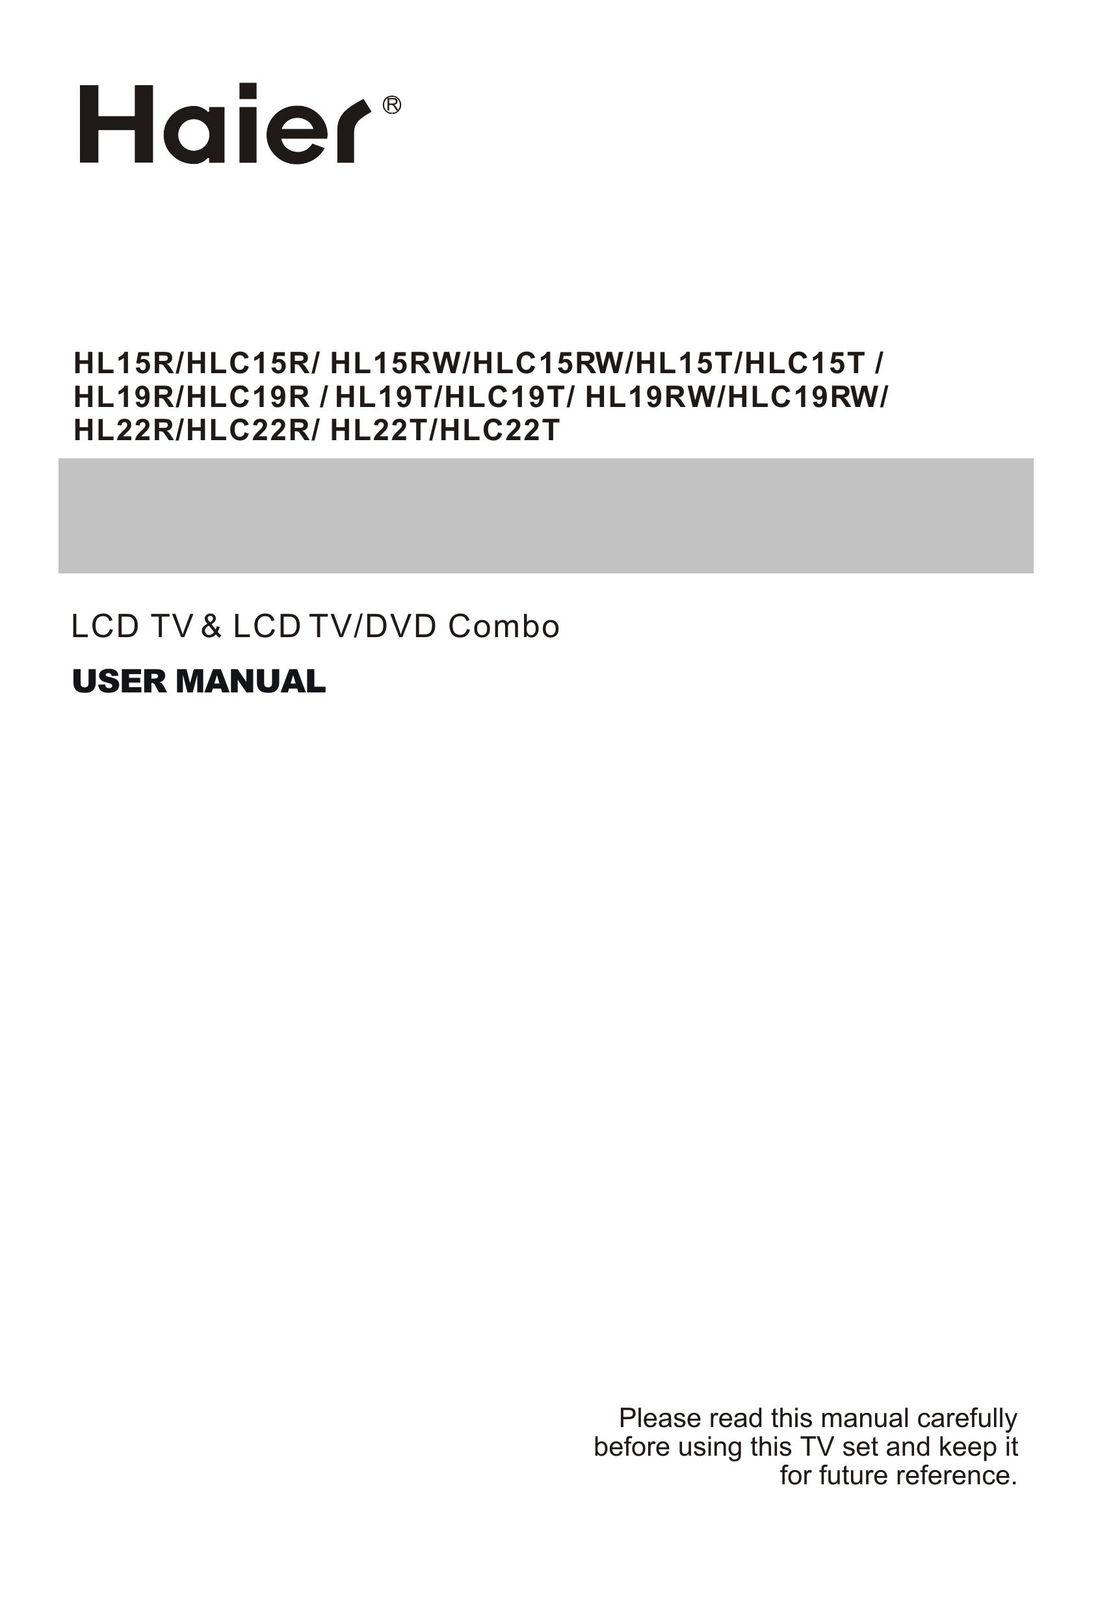 Haier HLC19RW TV DVD Combo User Manual